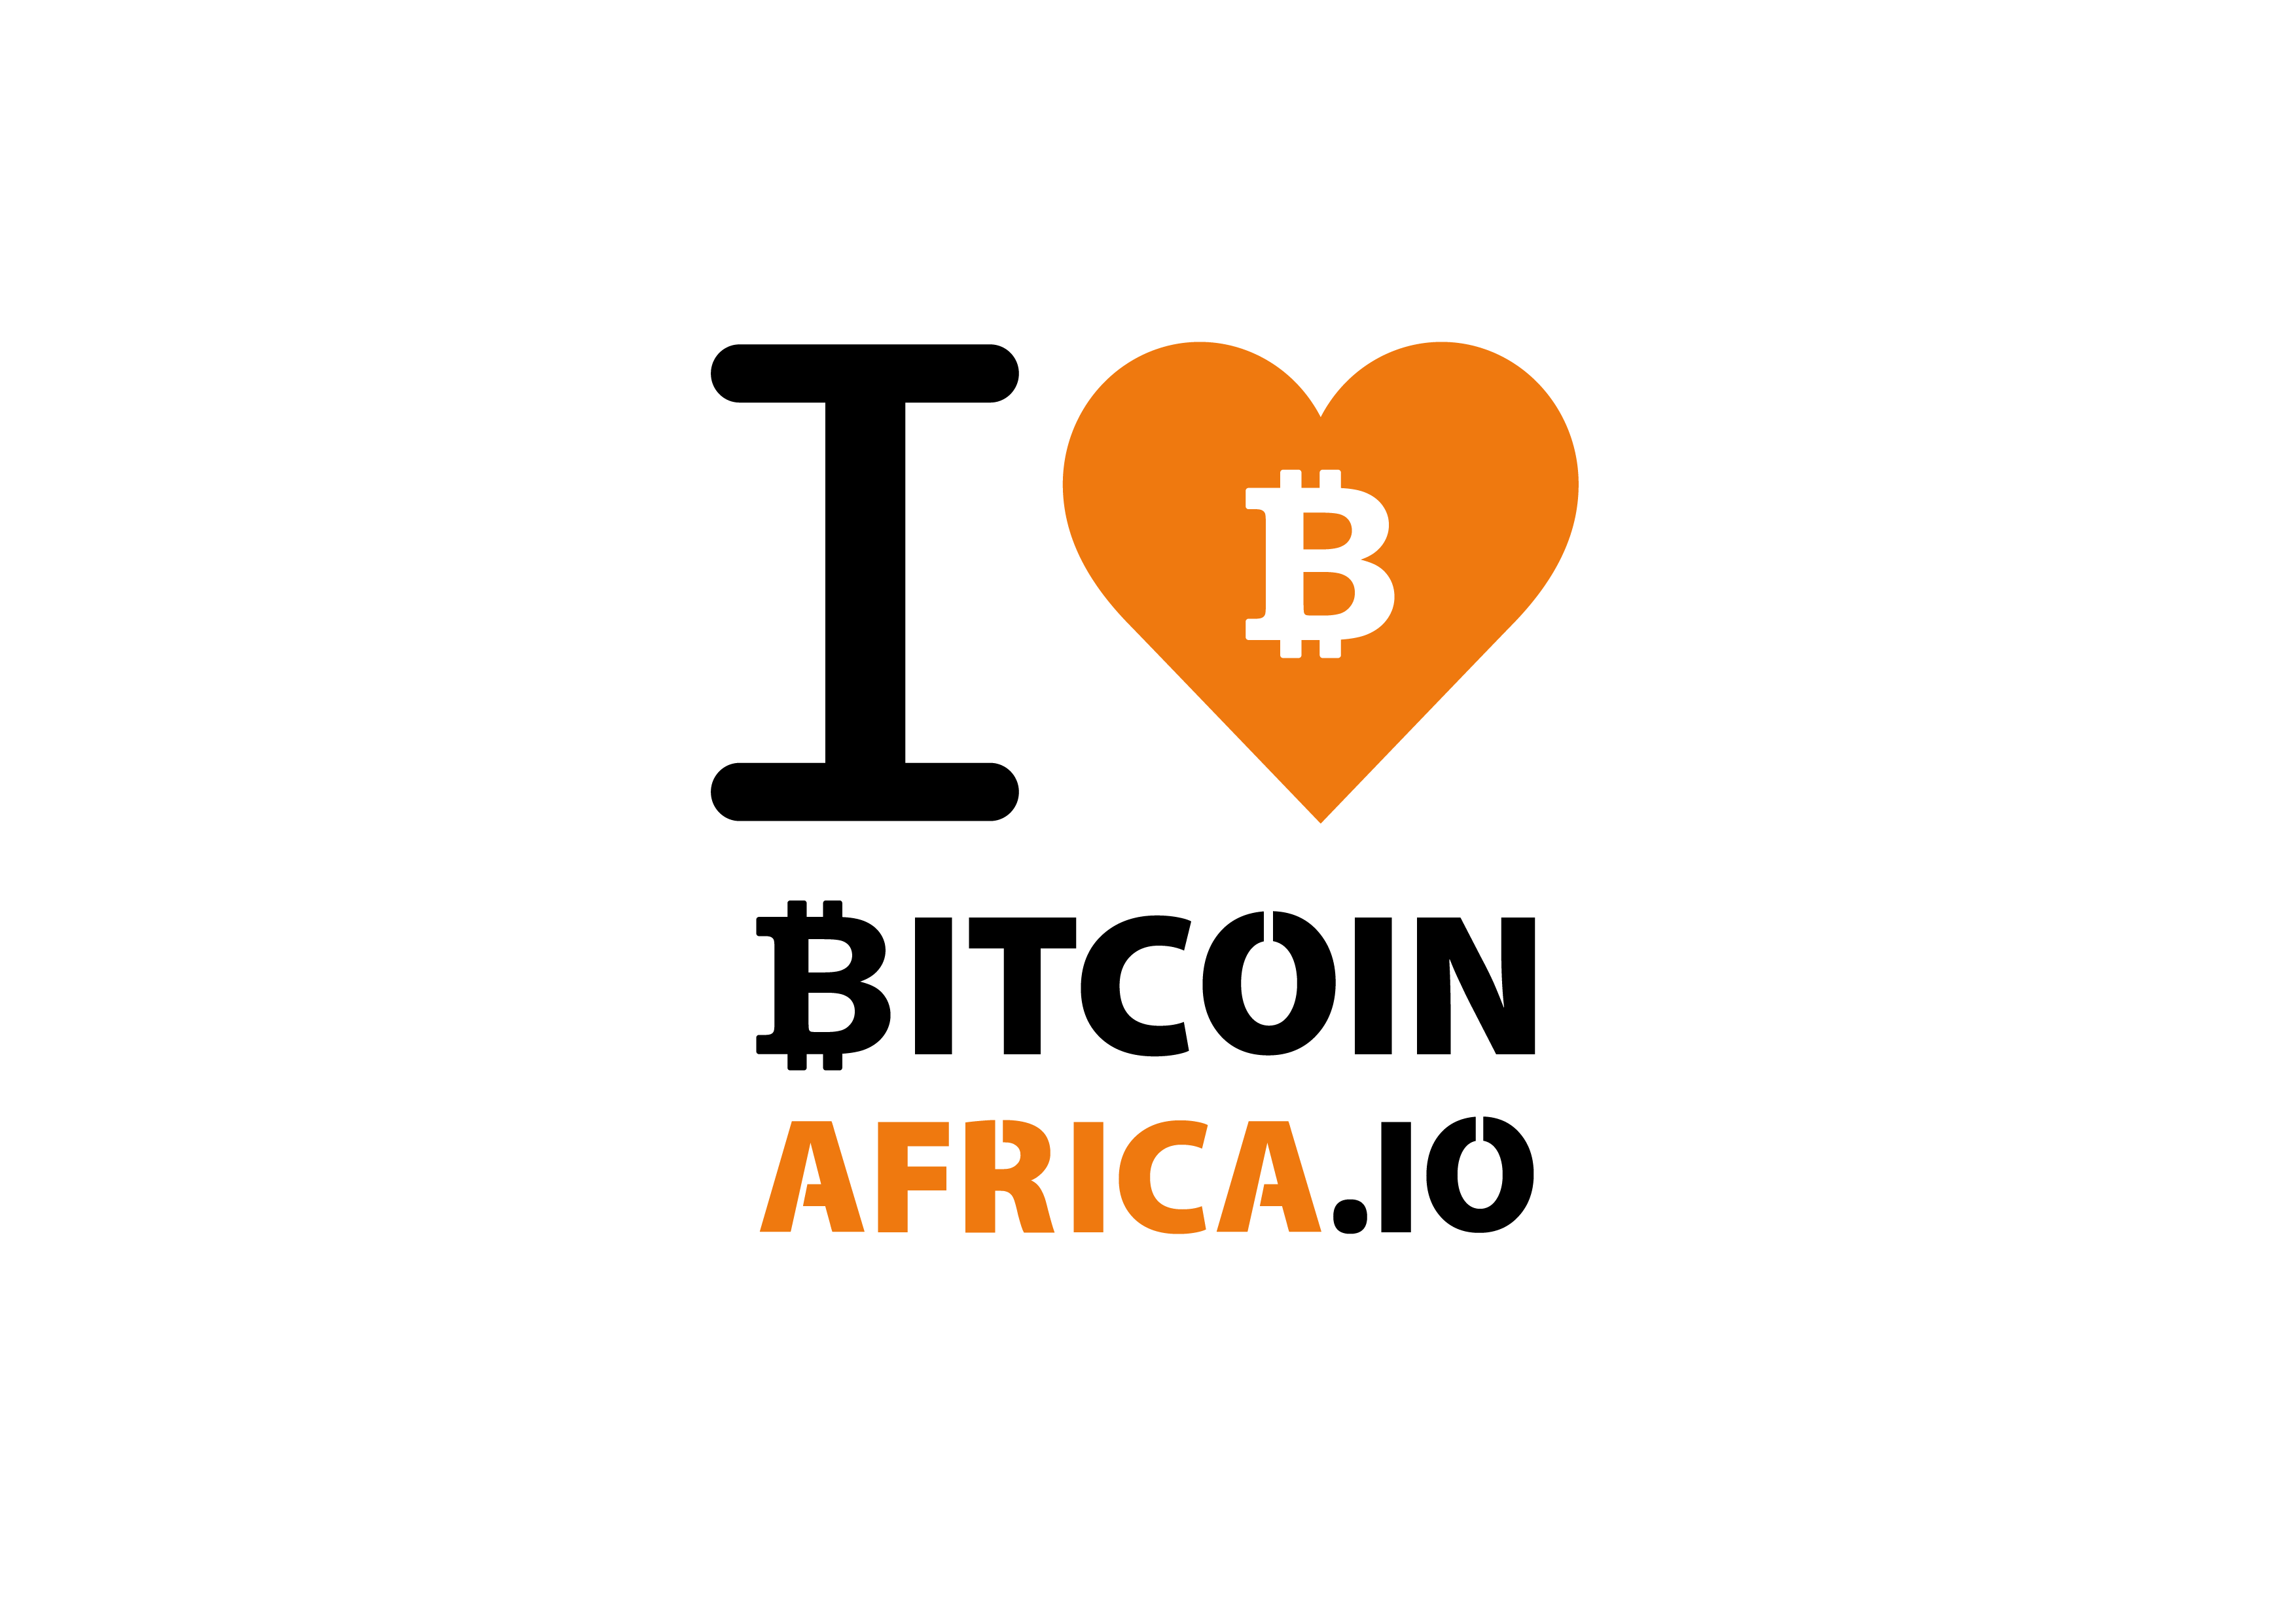 BitcoinAfrica.io